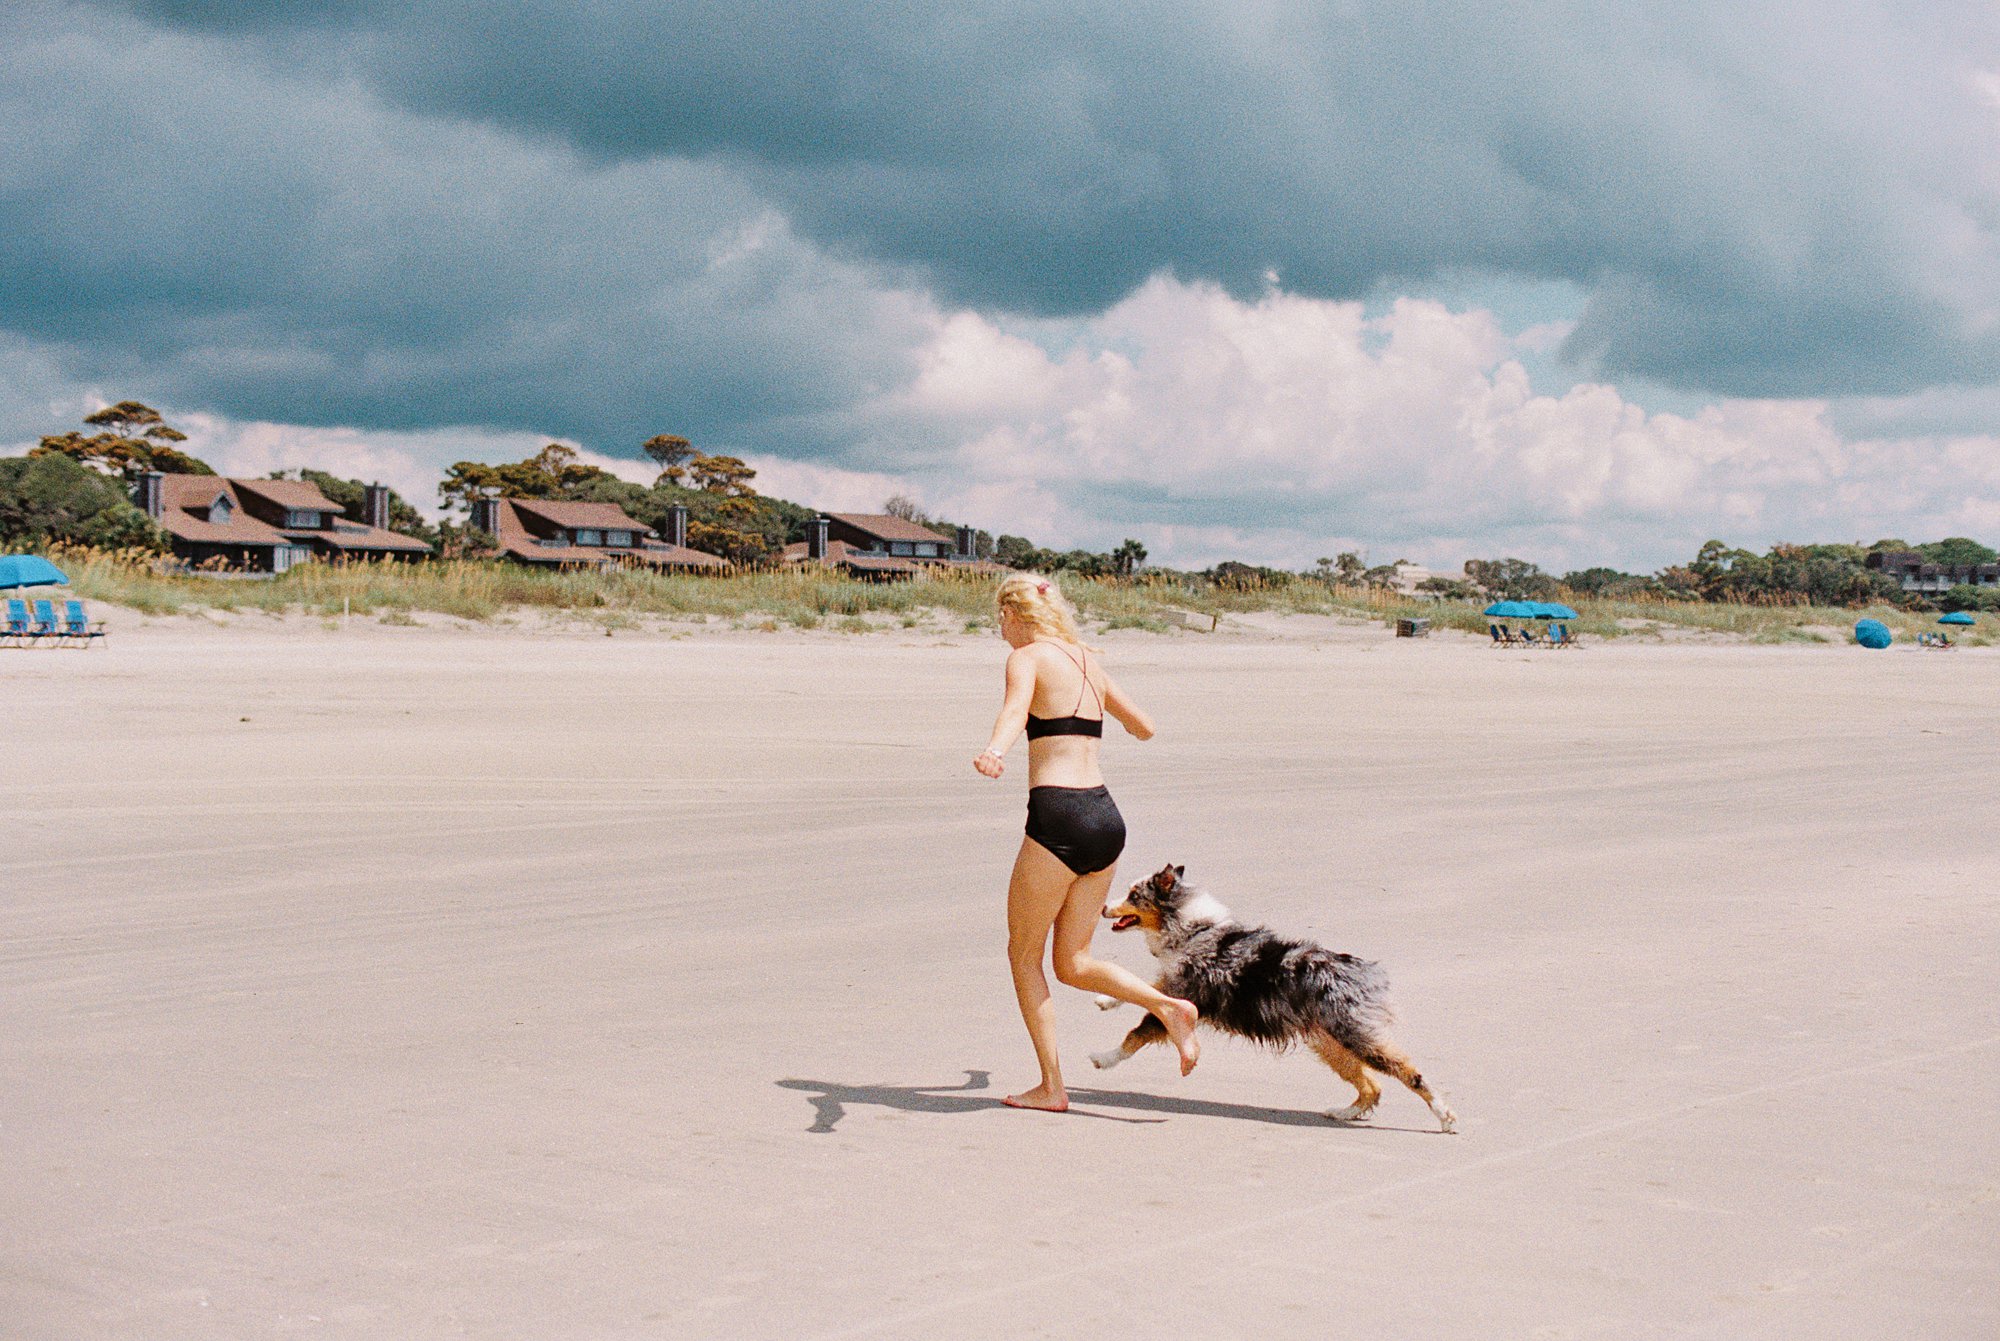 nikon fm3a and kodak gold 200 35mm film portrait of girl and dog running on kiawah island beach